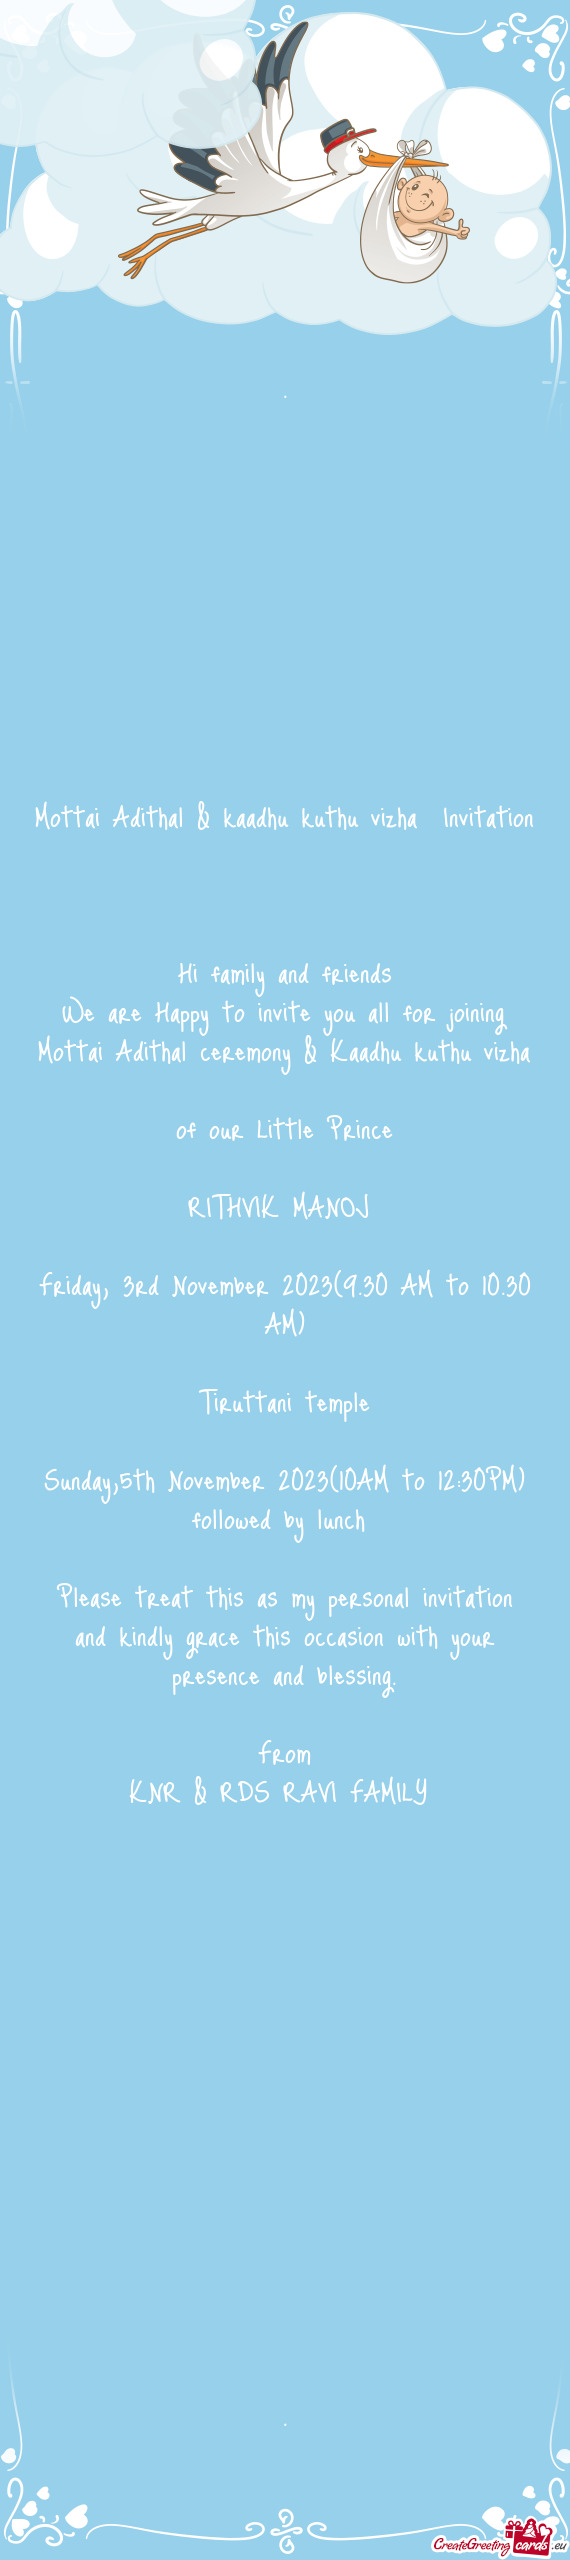 Mottai Adithal & kaadhu kuthu vizha Invitation